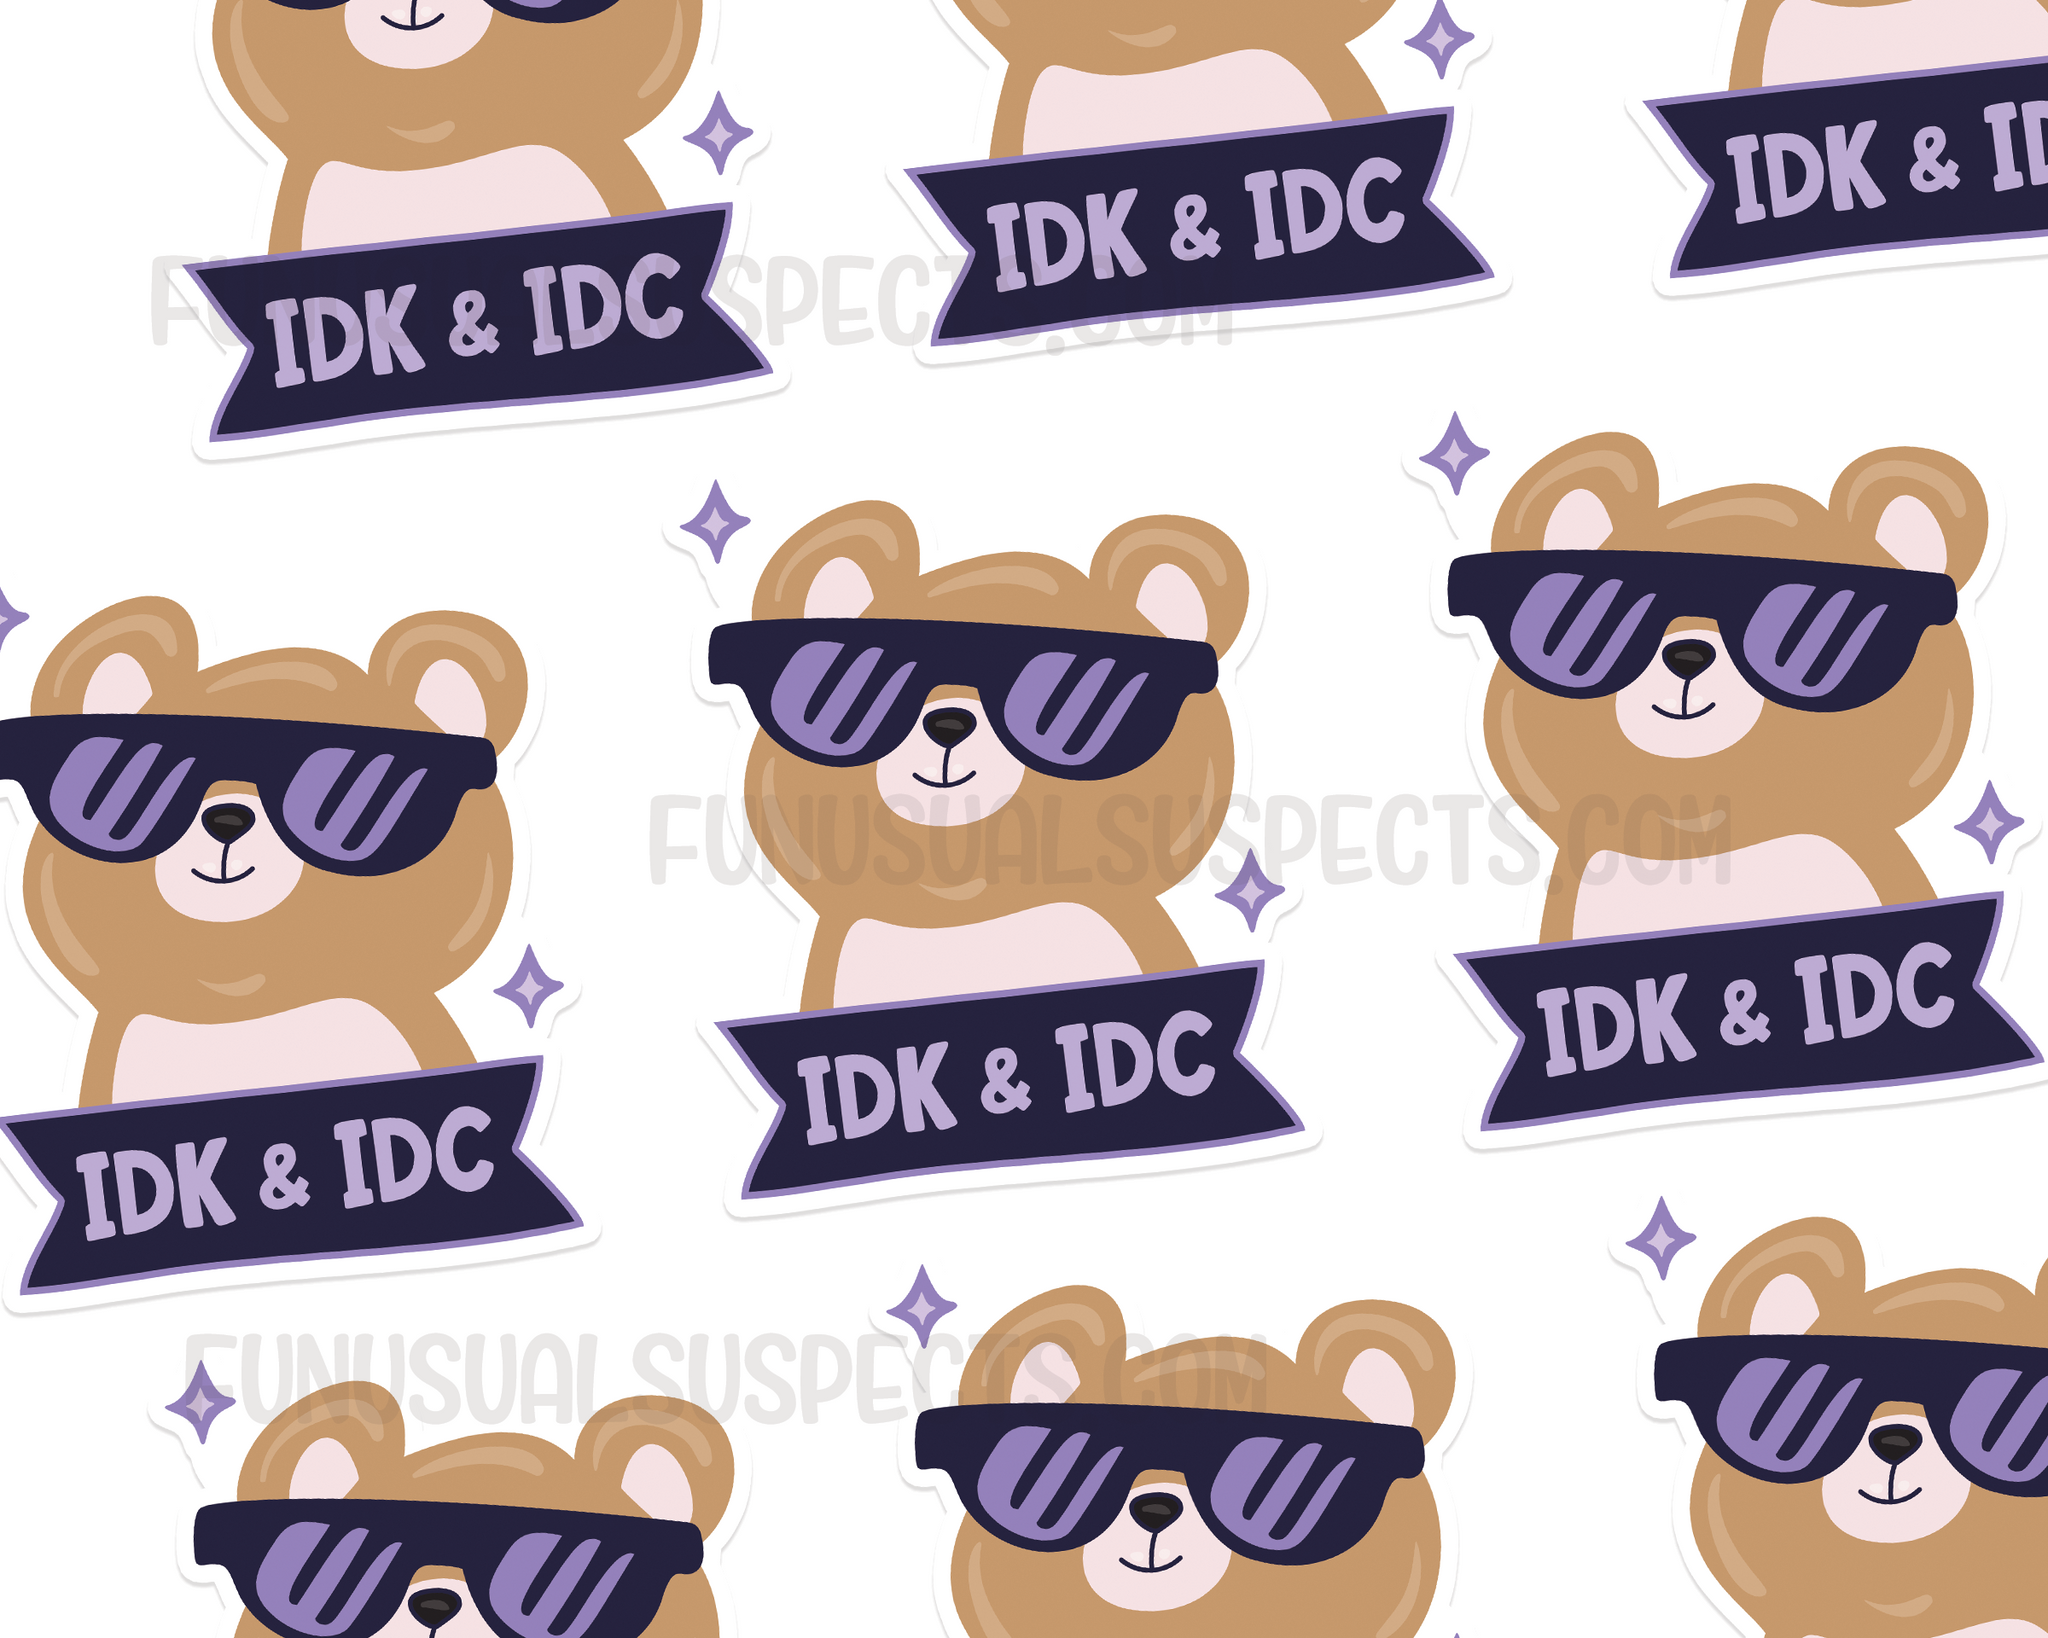 Bear IDK & IDC Sticker